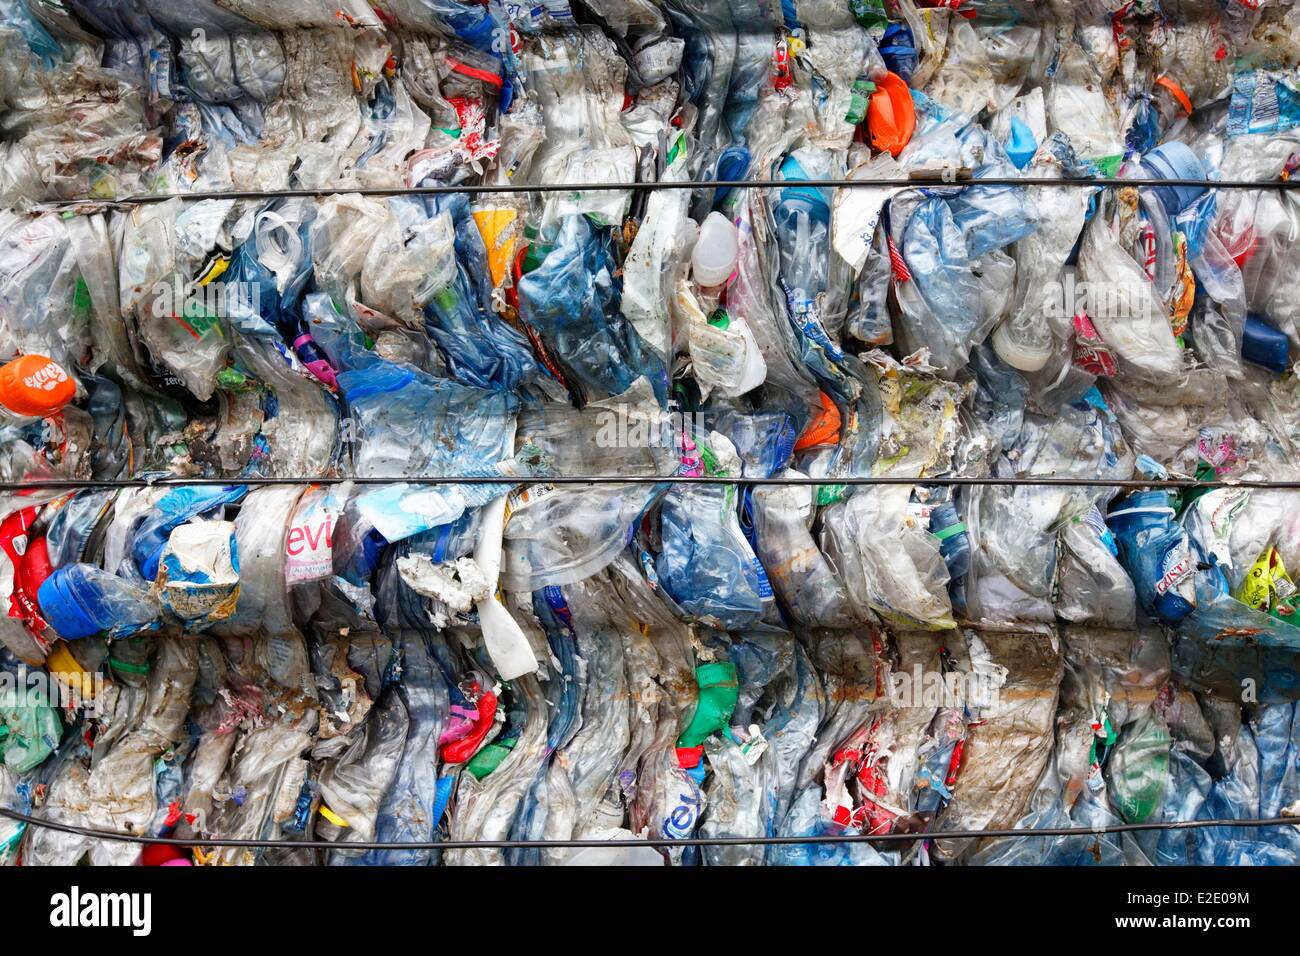 Frankreich Puy de Dome-Kunststoff-Flaschen recycling Haushalt-Müll sortieren  Echalier recycling-Unternehmen Stockfotografie - Alamy